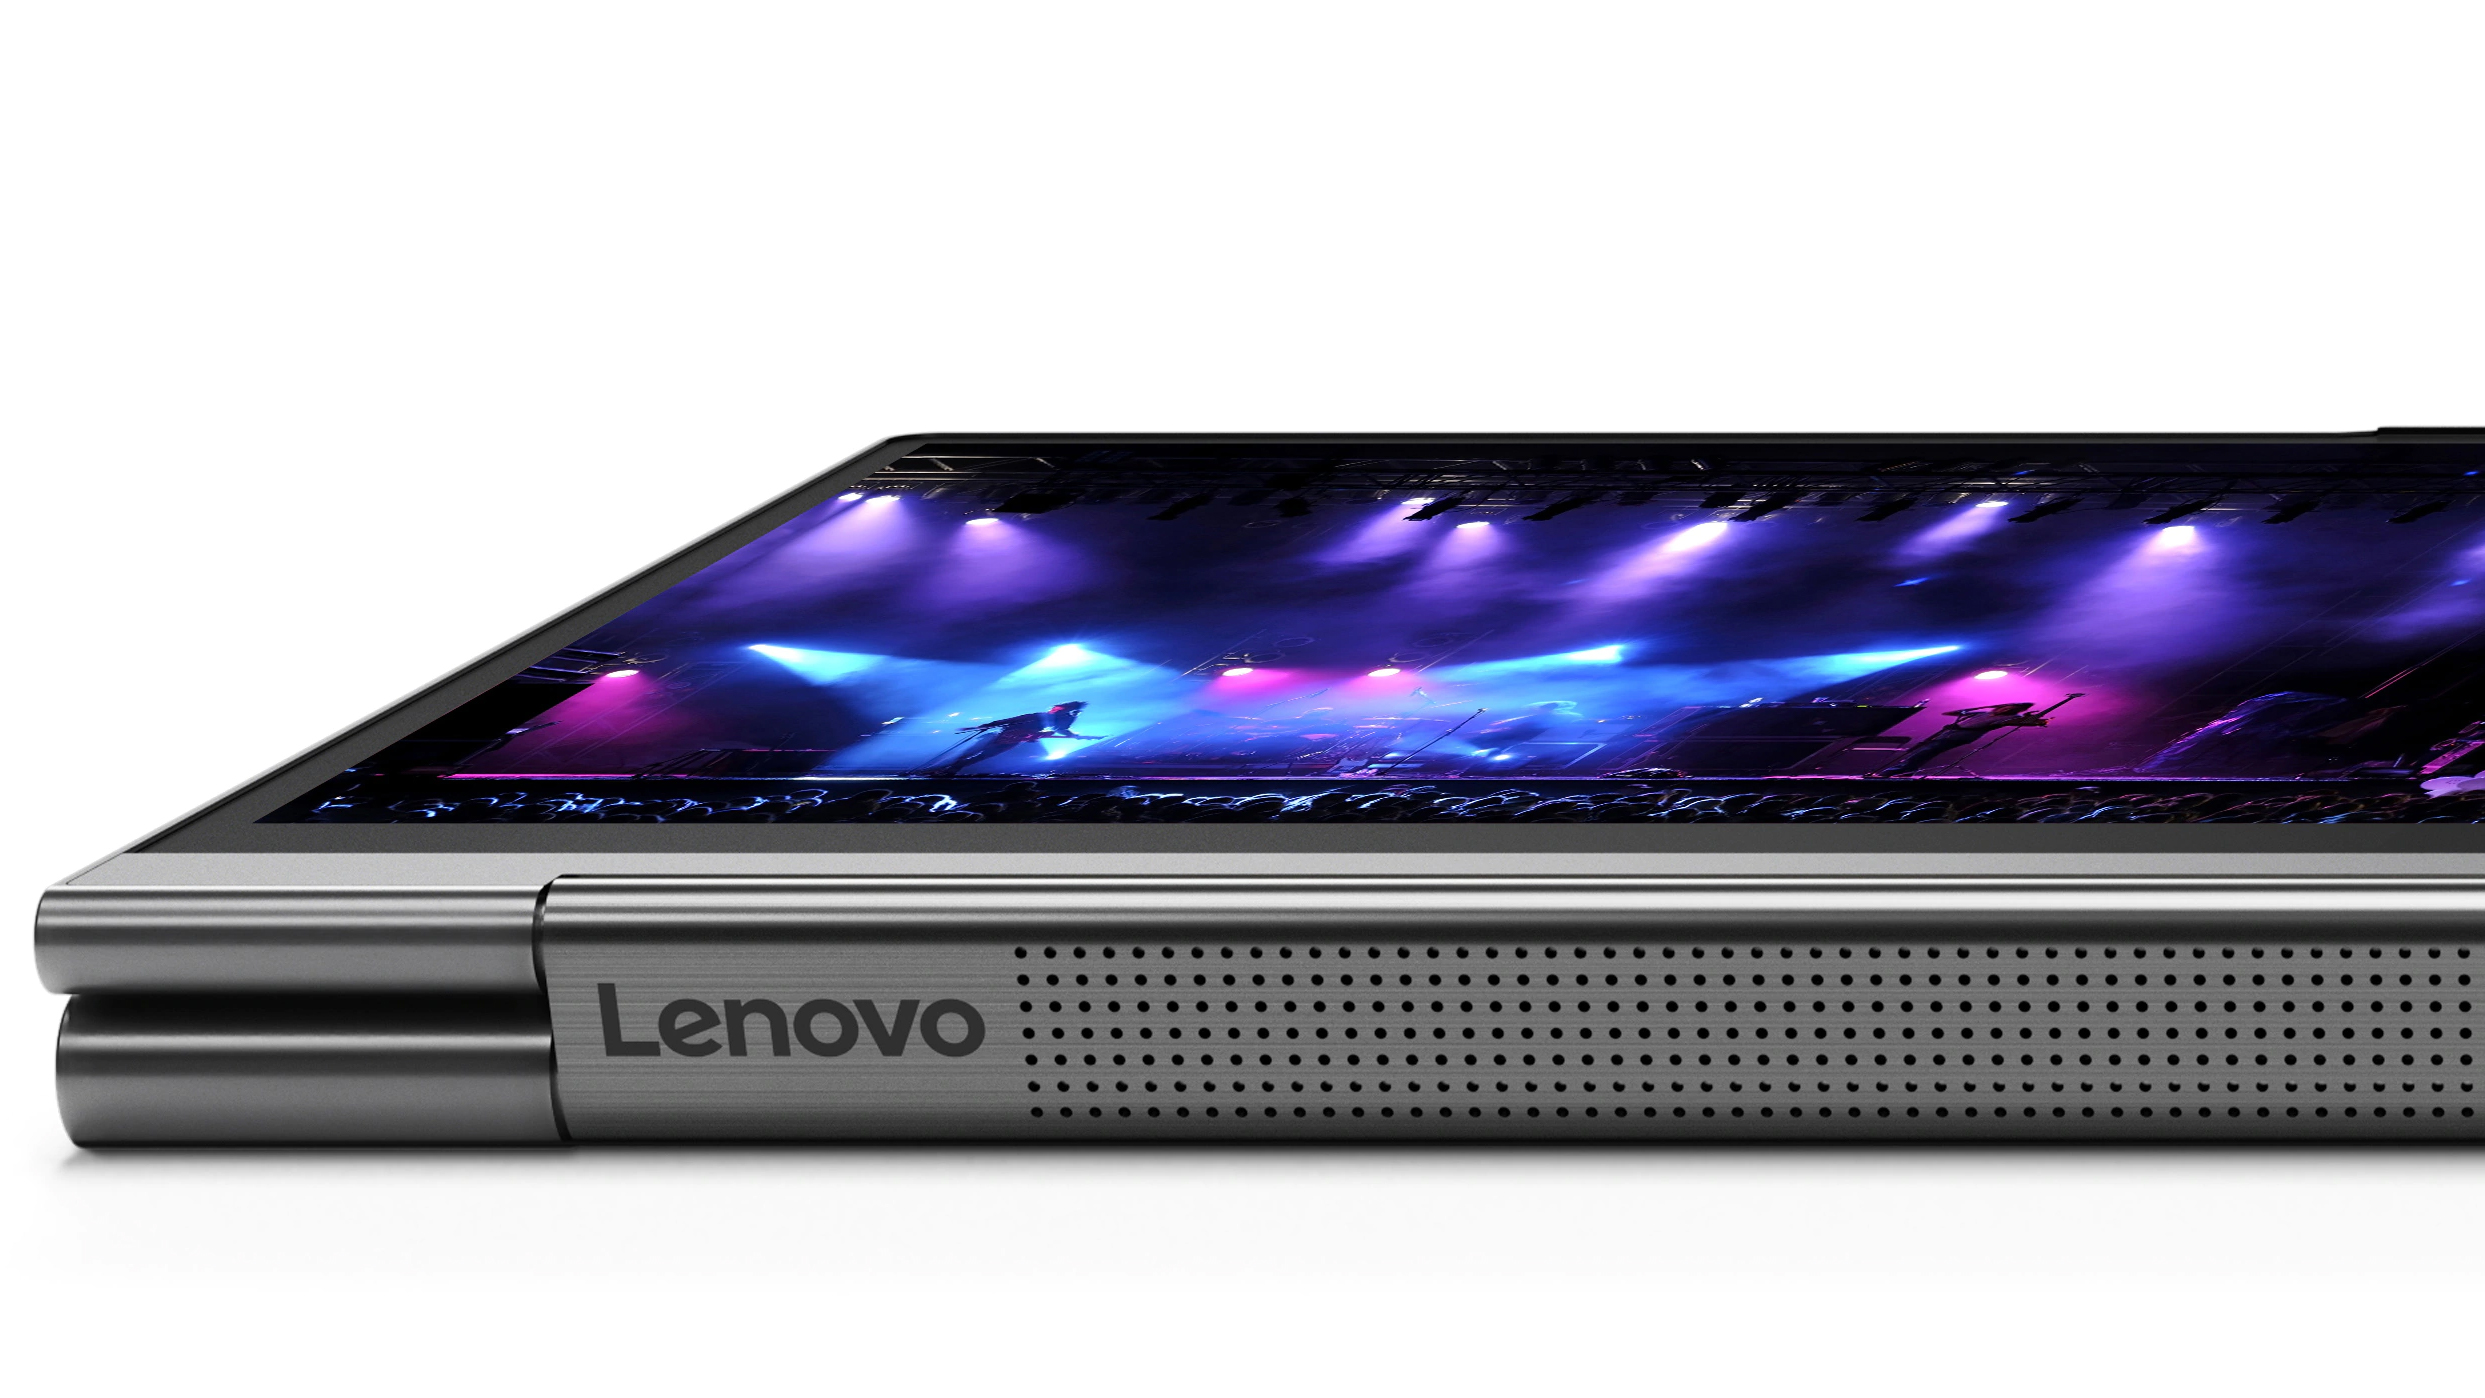 Lenovo C940 Silver - HD Wallpaper 